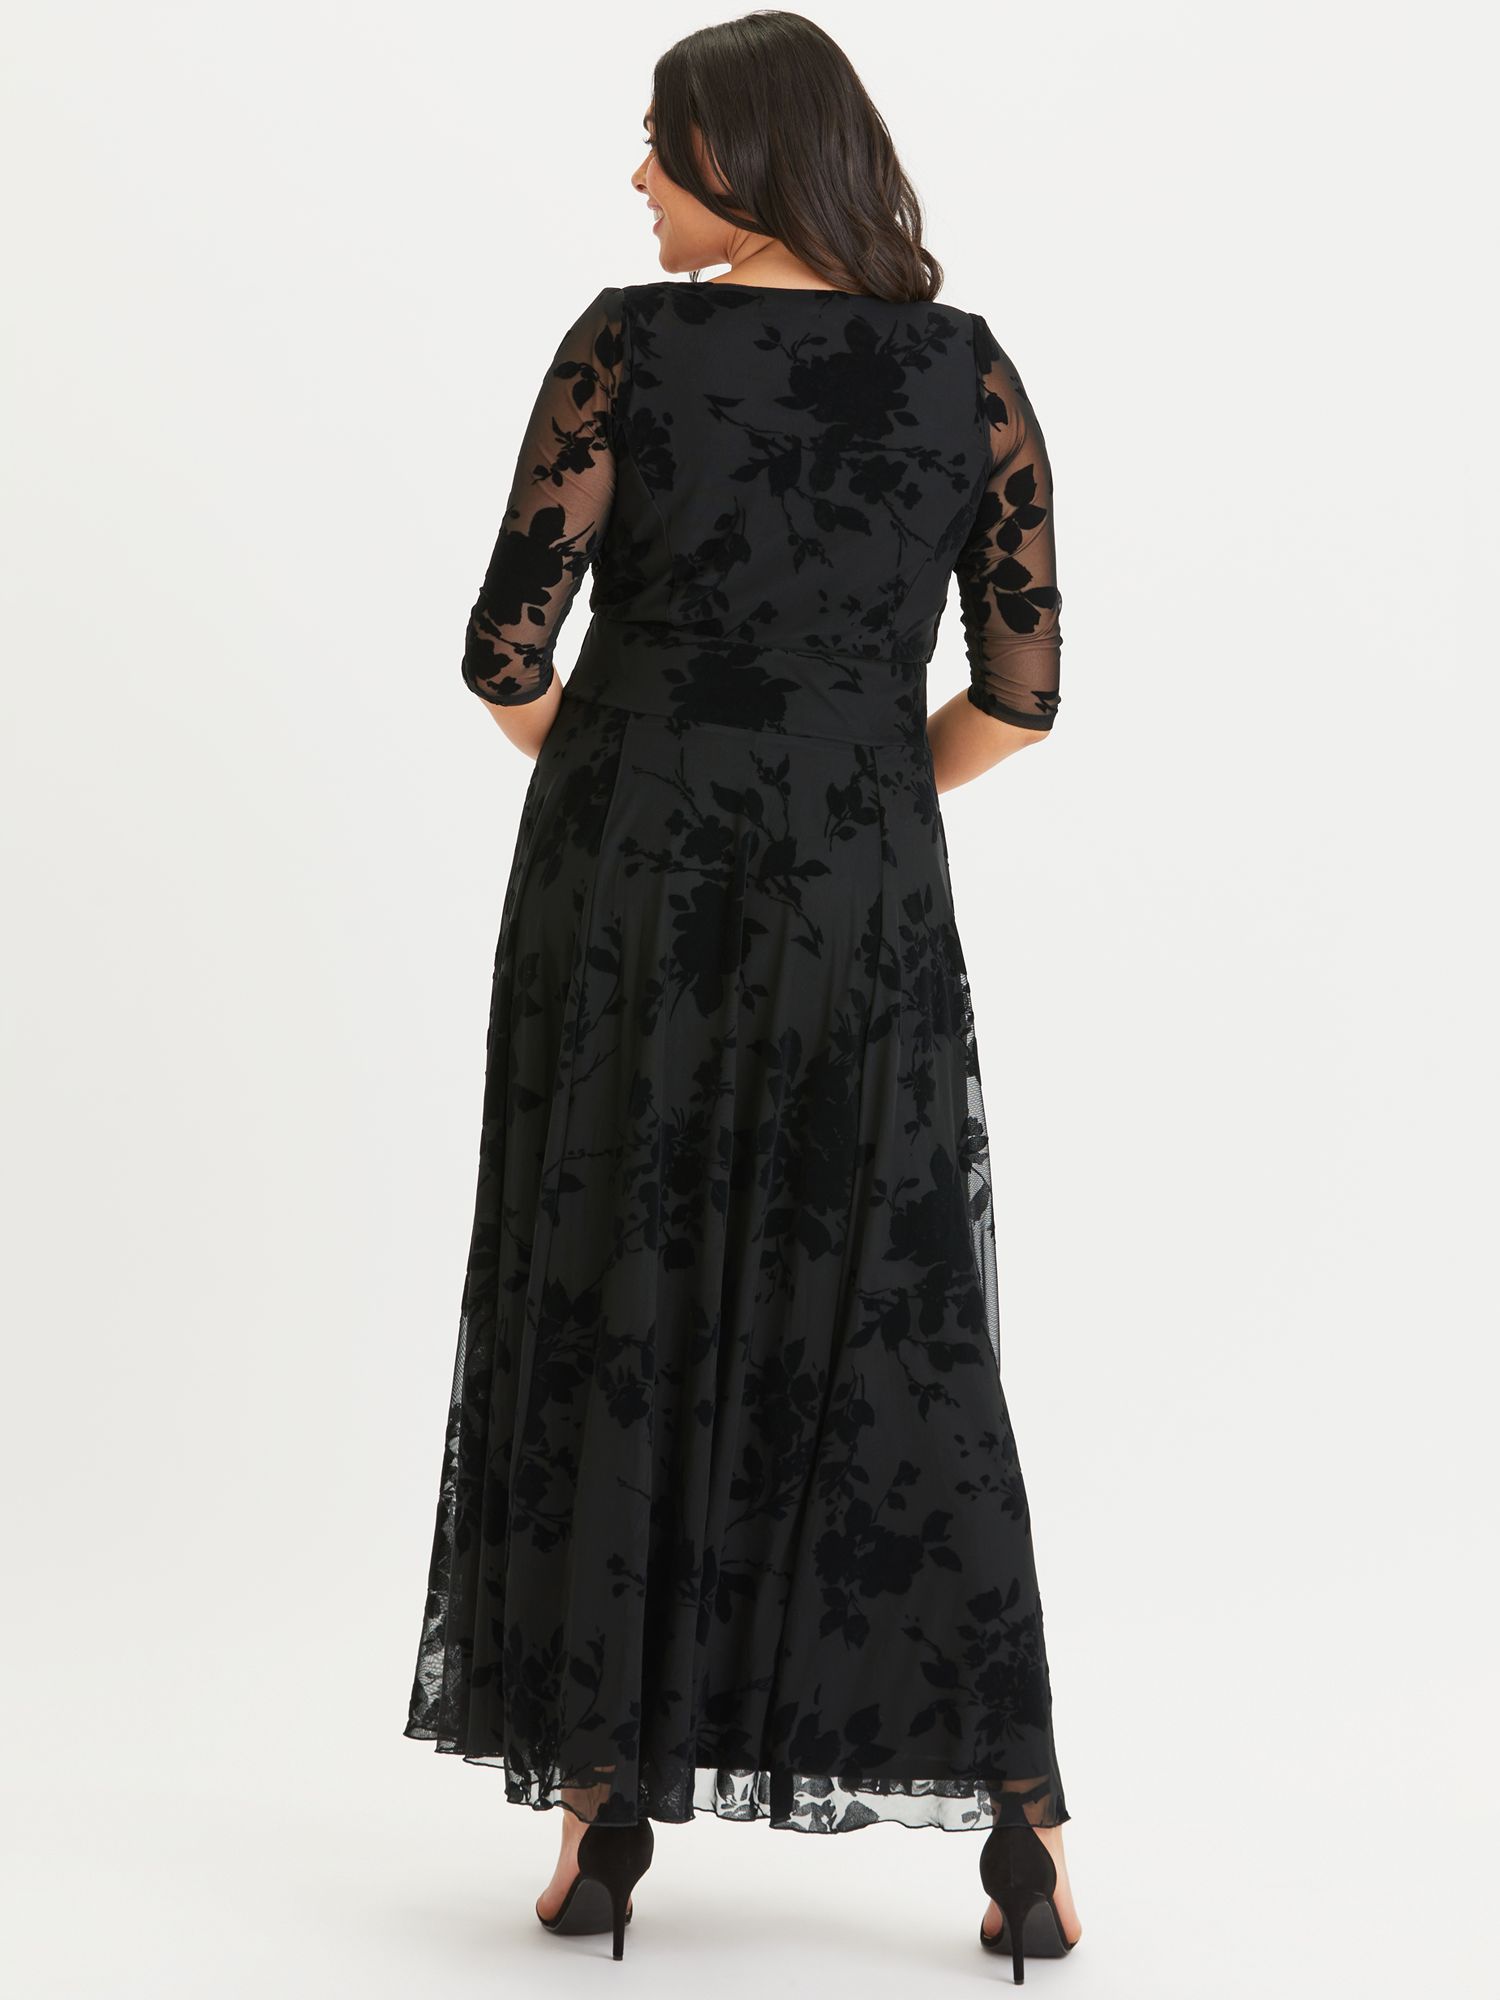 Scarlett & Jo Floral Velvet Dress, Black Floral at John Lewis & Partners